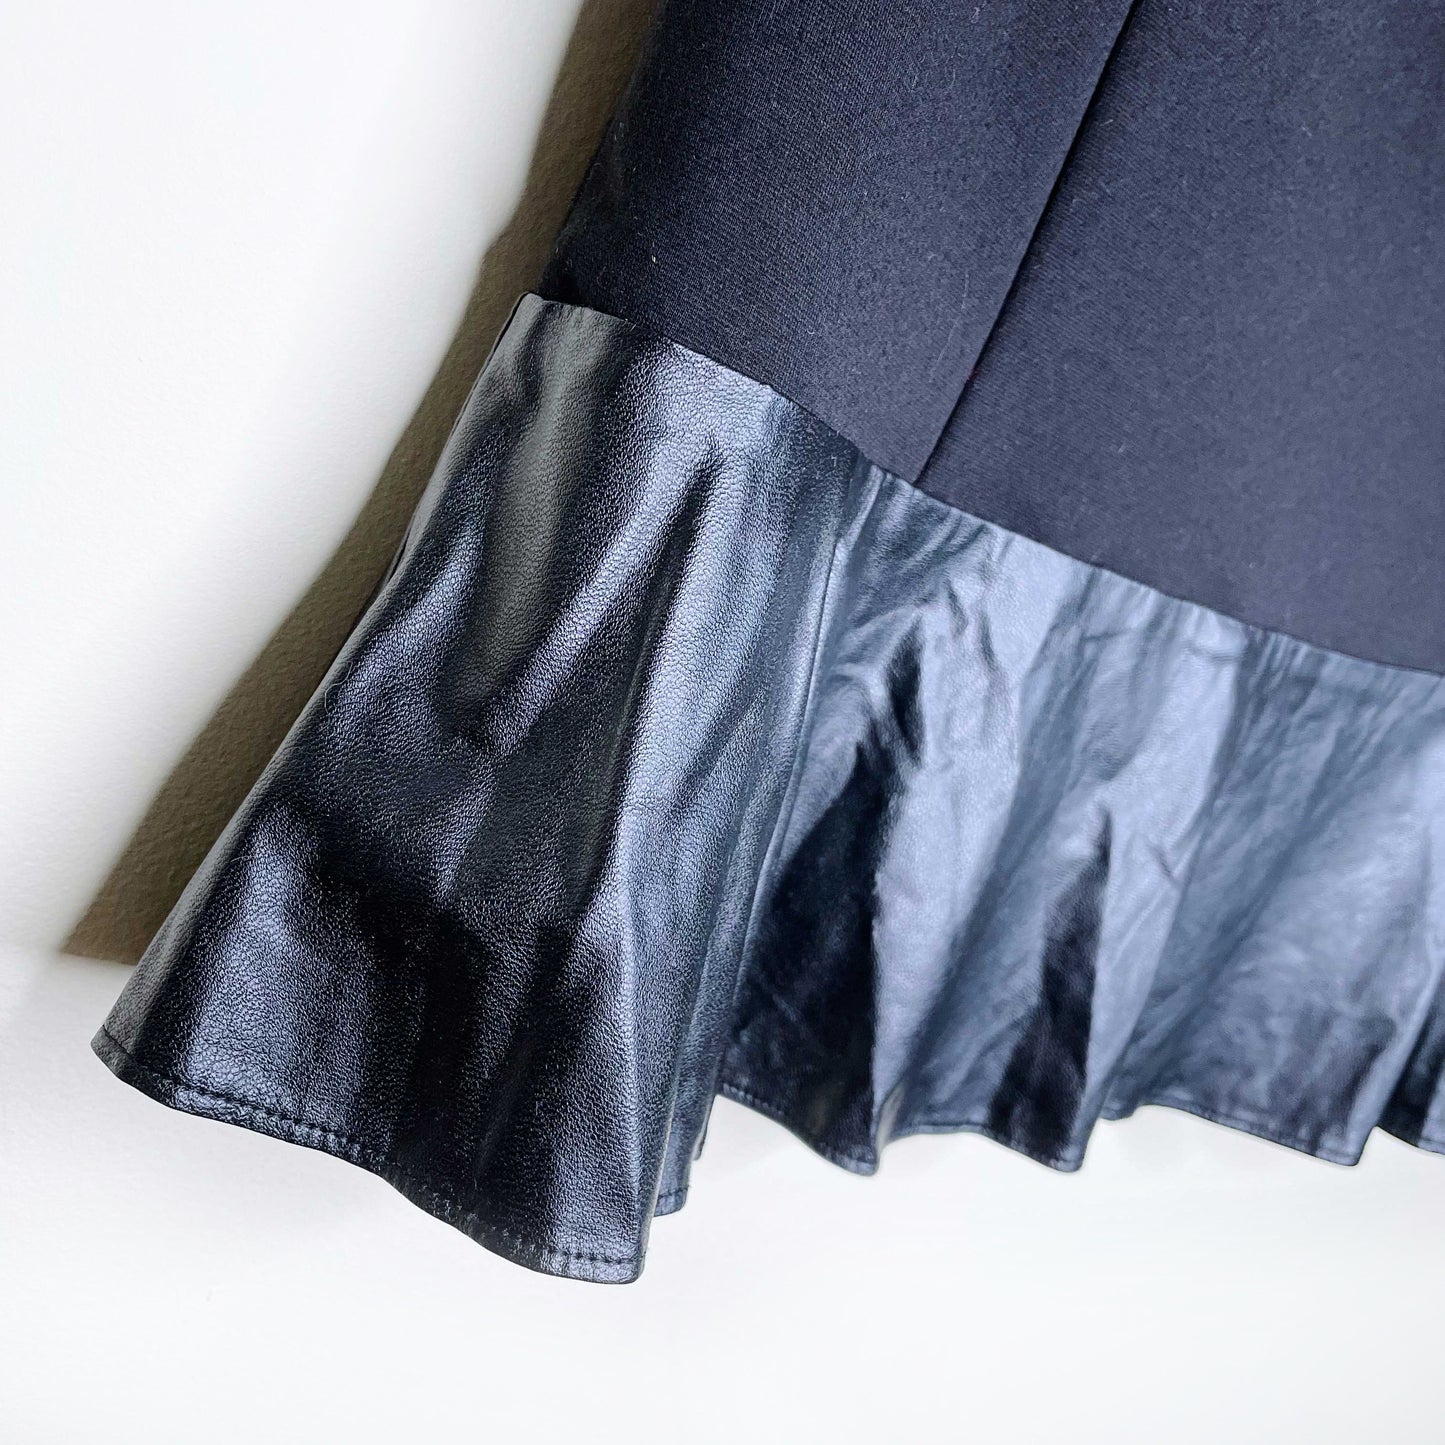 sandro black mini skirt with faux leather peplum hem - size 2